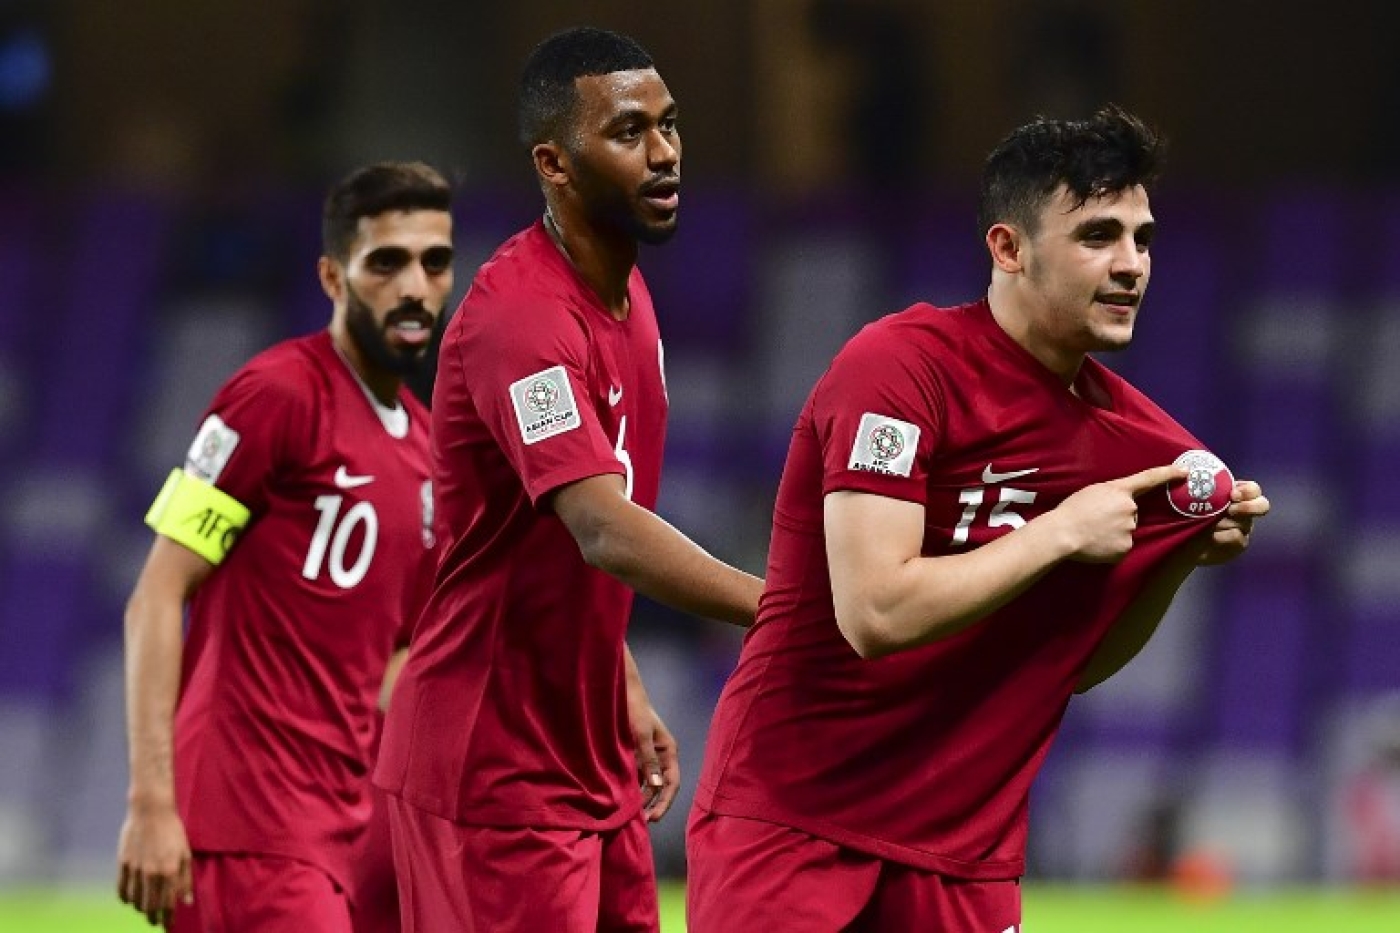 qatar national team jersey 2019